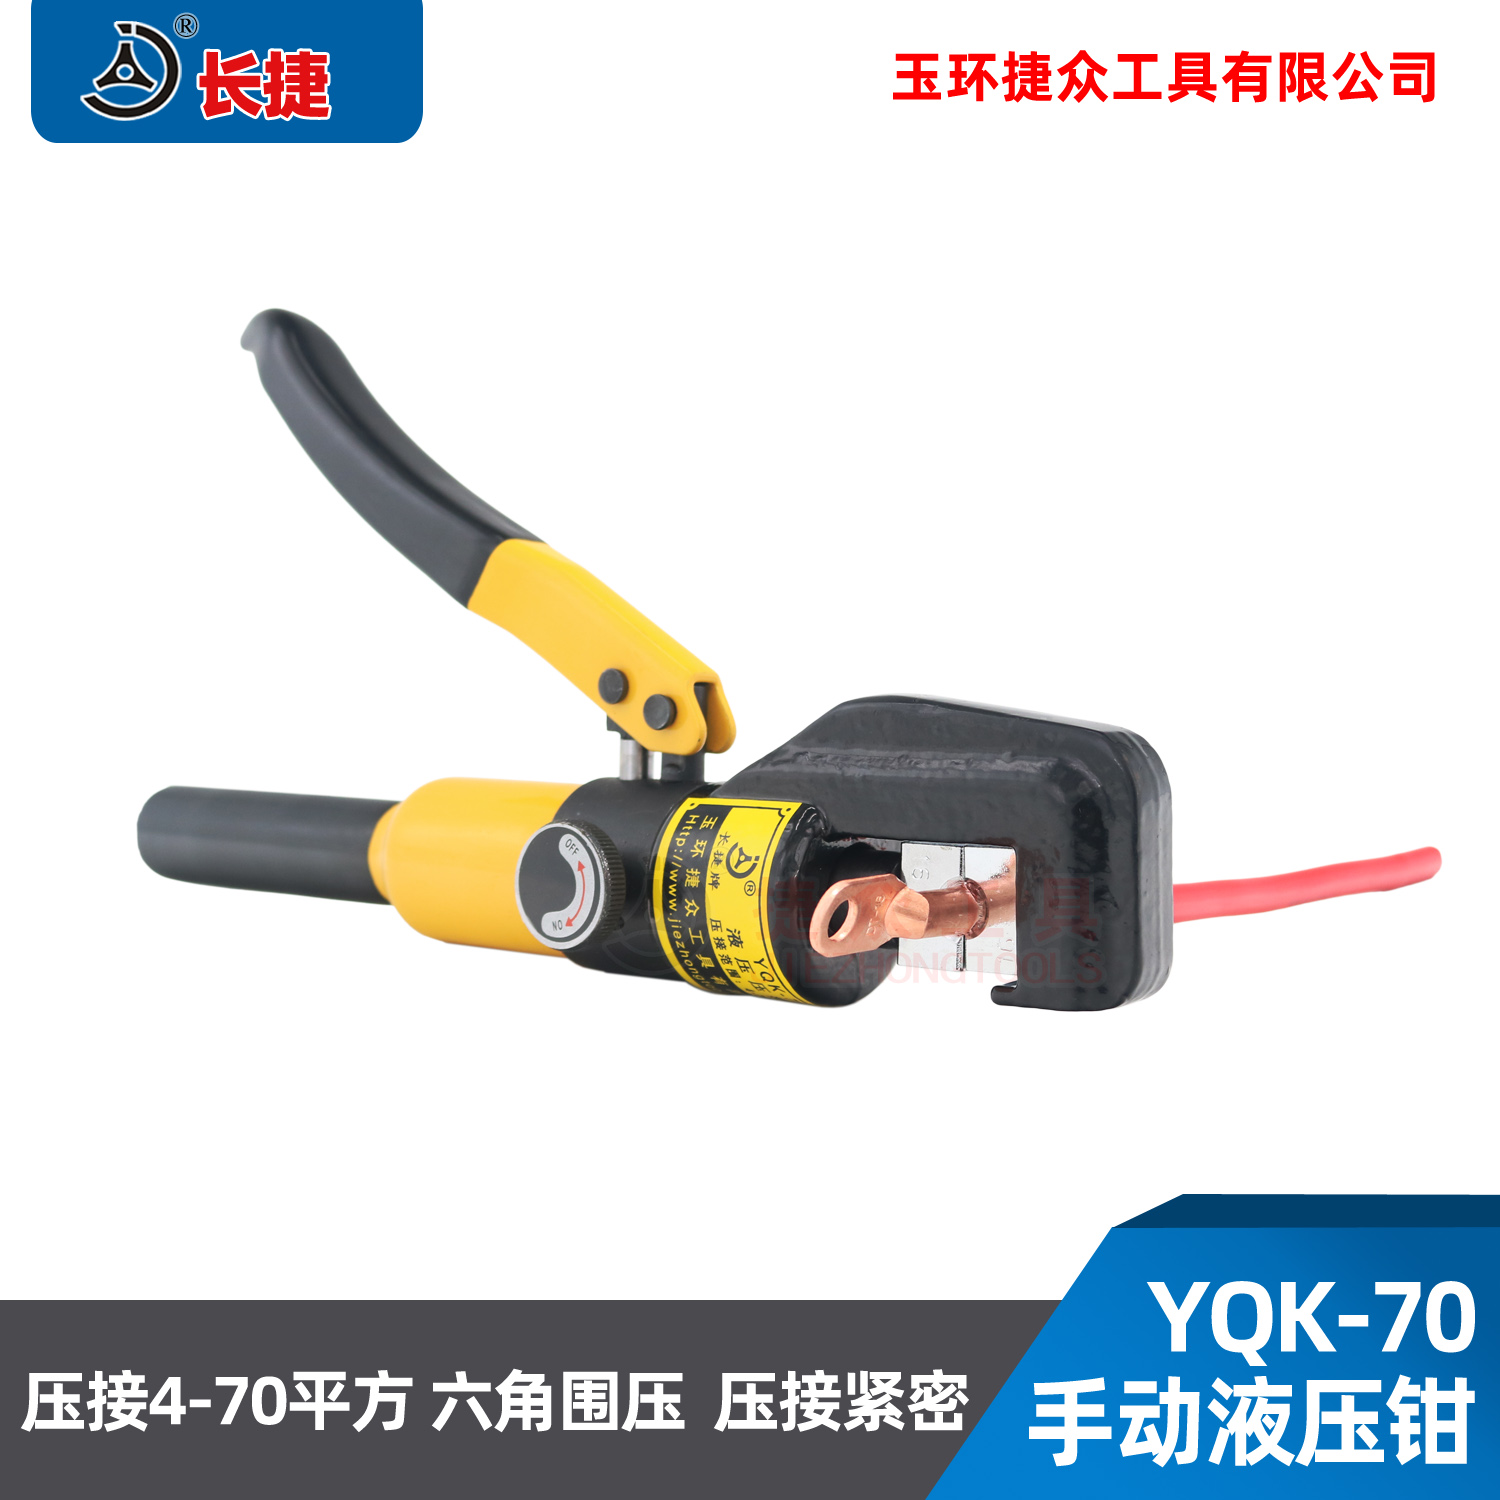 YQK-70液压压接钳 长捷 手动液压钳 现货 4-70mm精品压线钳4